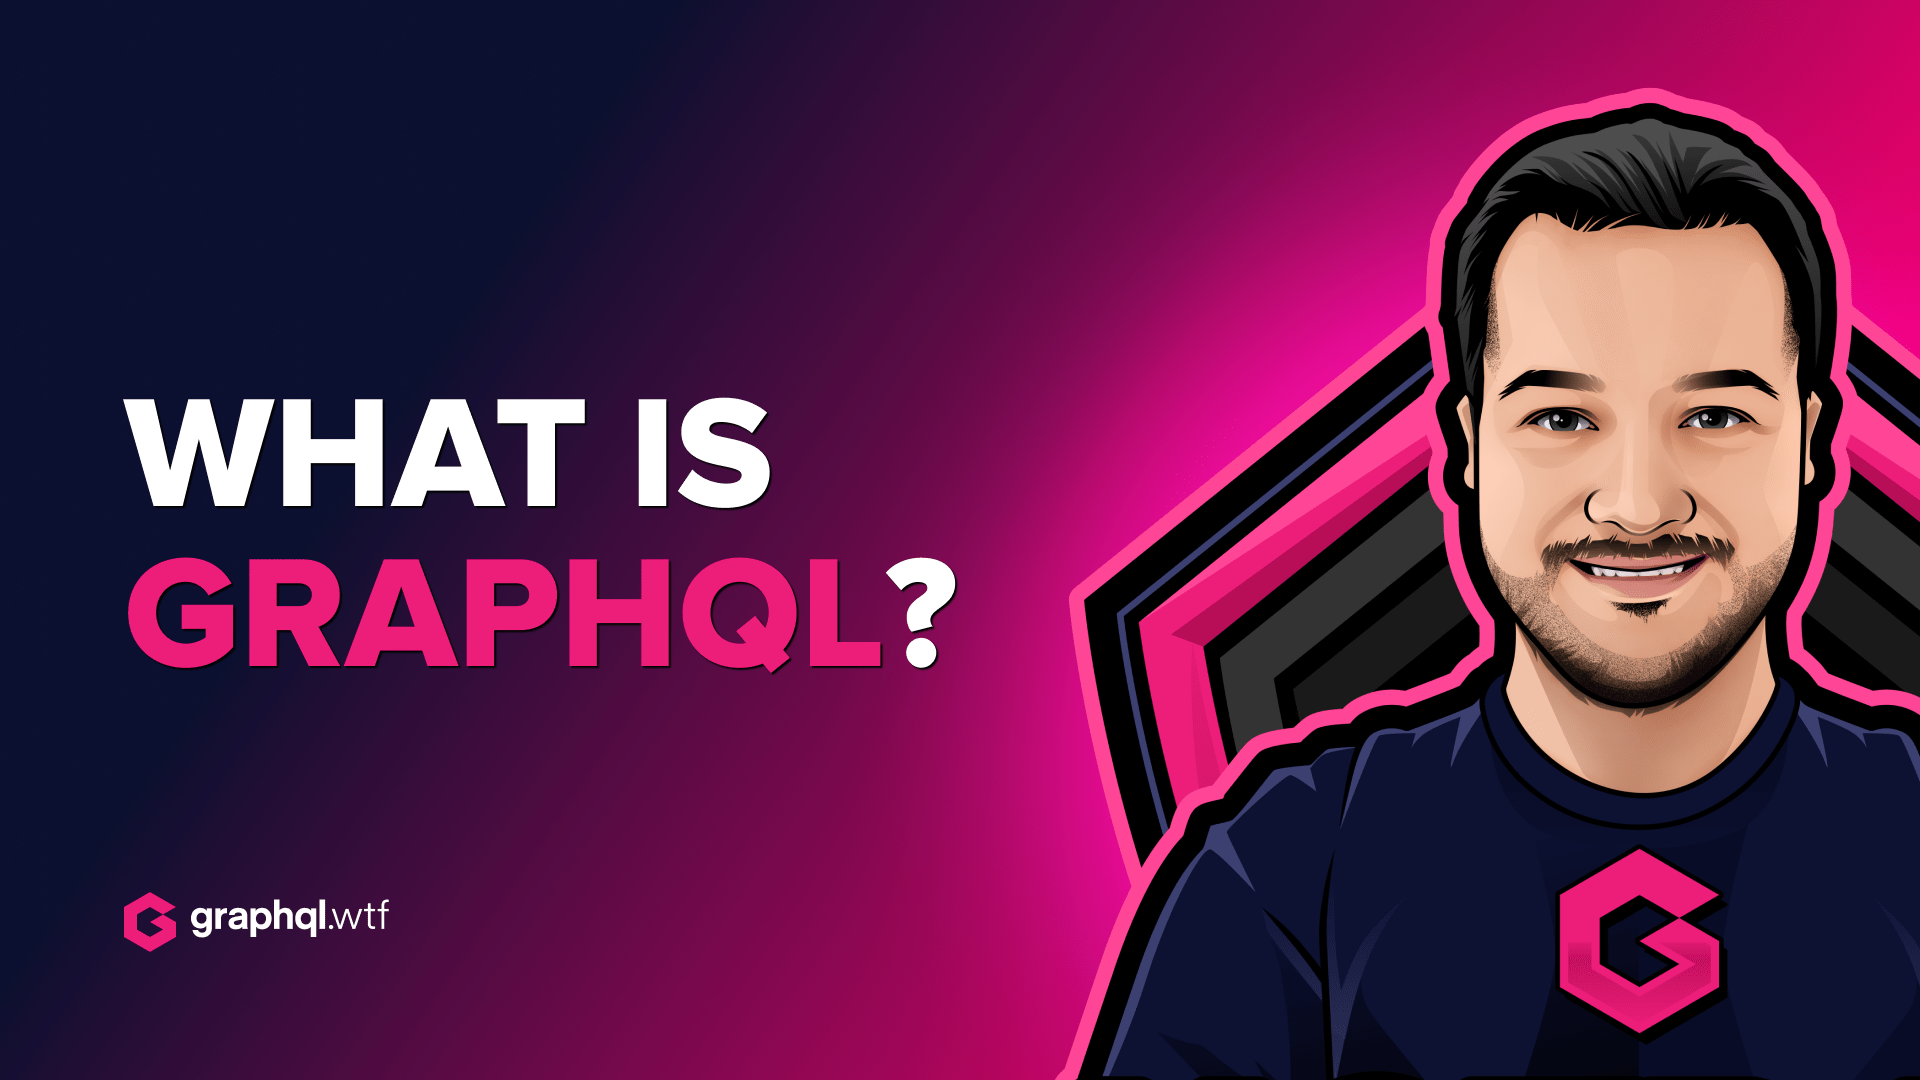 What is GraphQL?